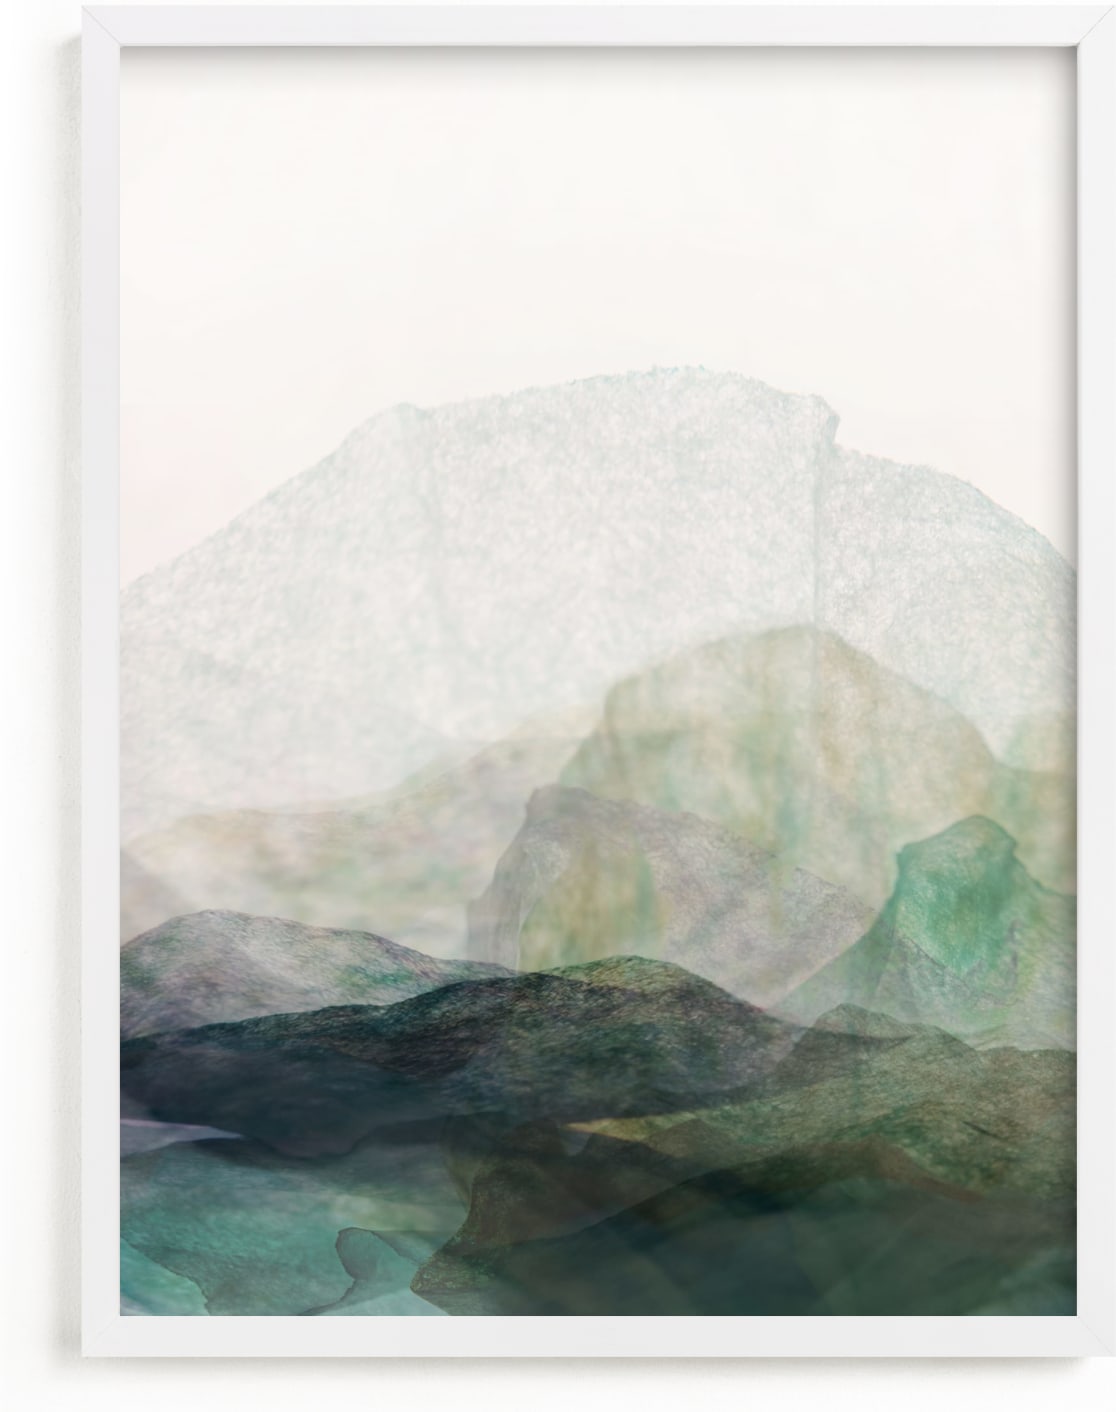 This is a white, grey, green art by Karen Kardatzke called Finding Balance No. 1.